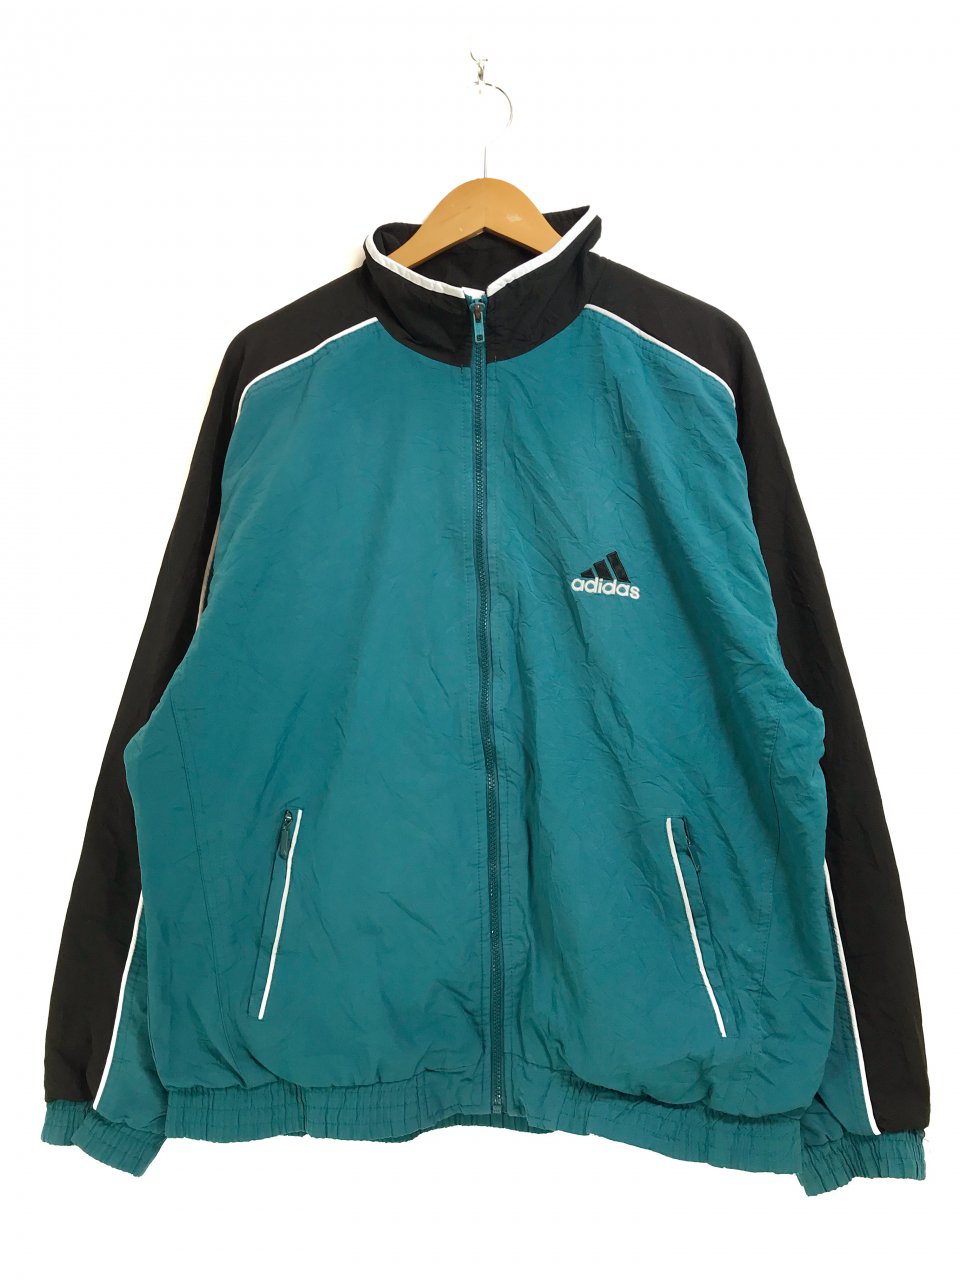 90s adidas Logo Nylon Jacket 青黒 L アディダス ナイロンジャケット